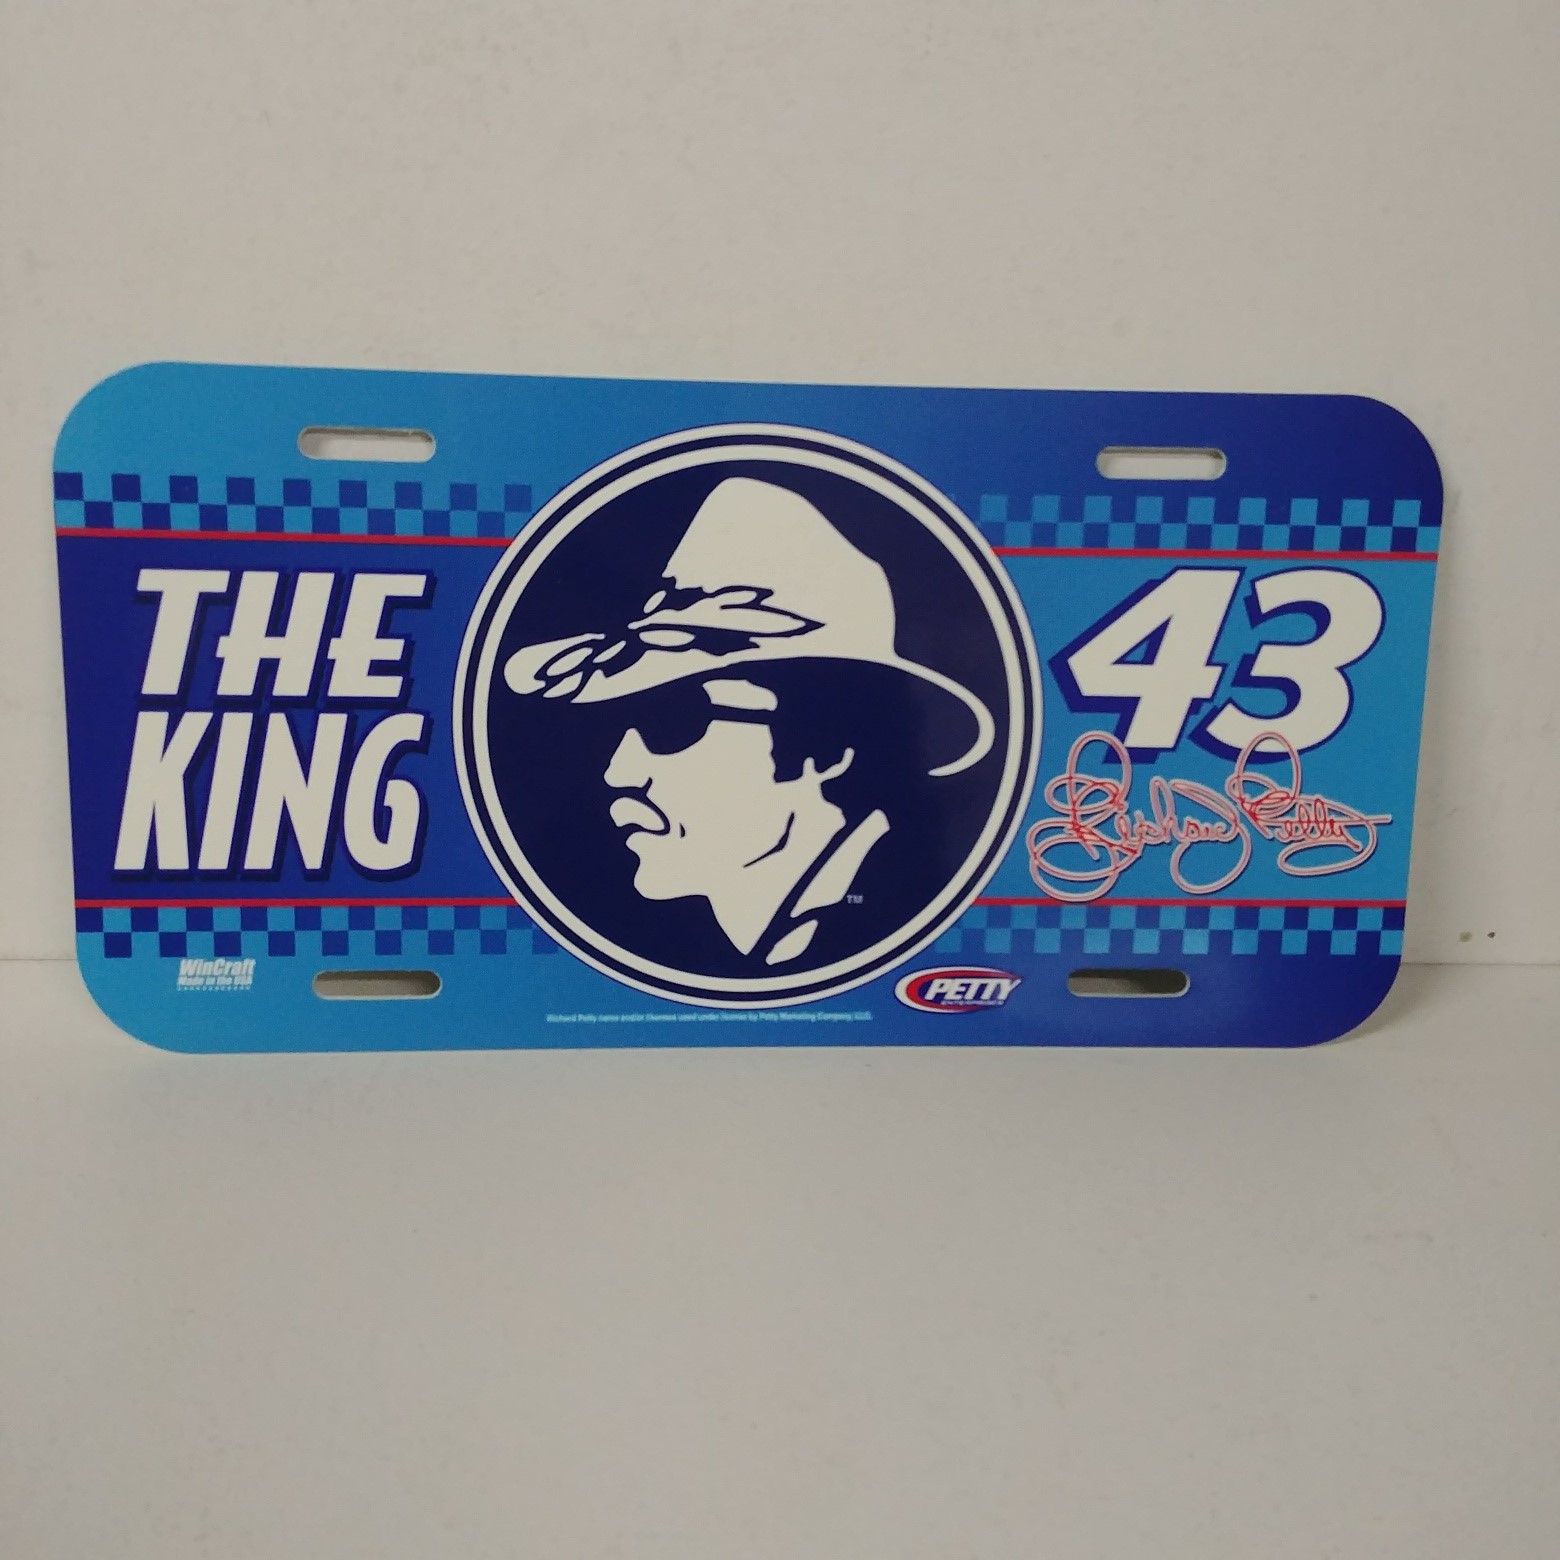 2003 Richard Petty "The King" plastic license plate